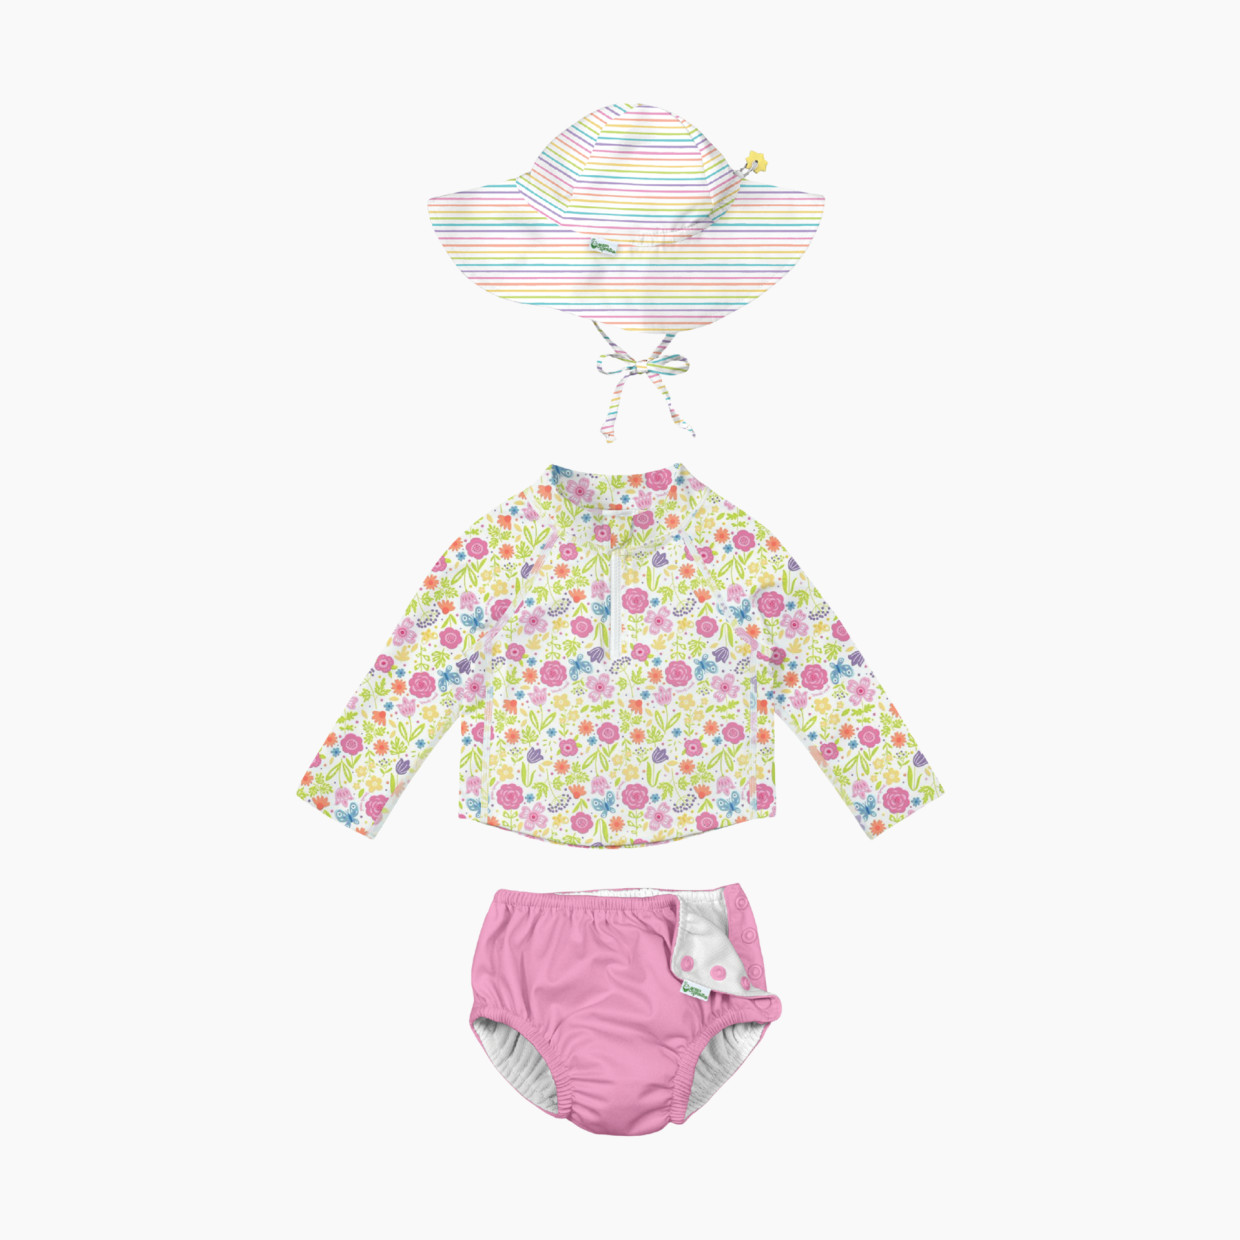 GREEN SPROUTS UPF 50+ Snap Swim Diaper & Rashguard Set with Hat - Light Pink/Multicolor Flower Garden/Rainbow Pinstripe, 0-6 Months.